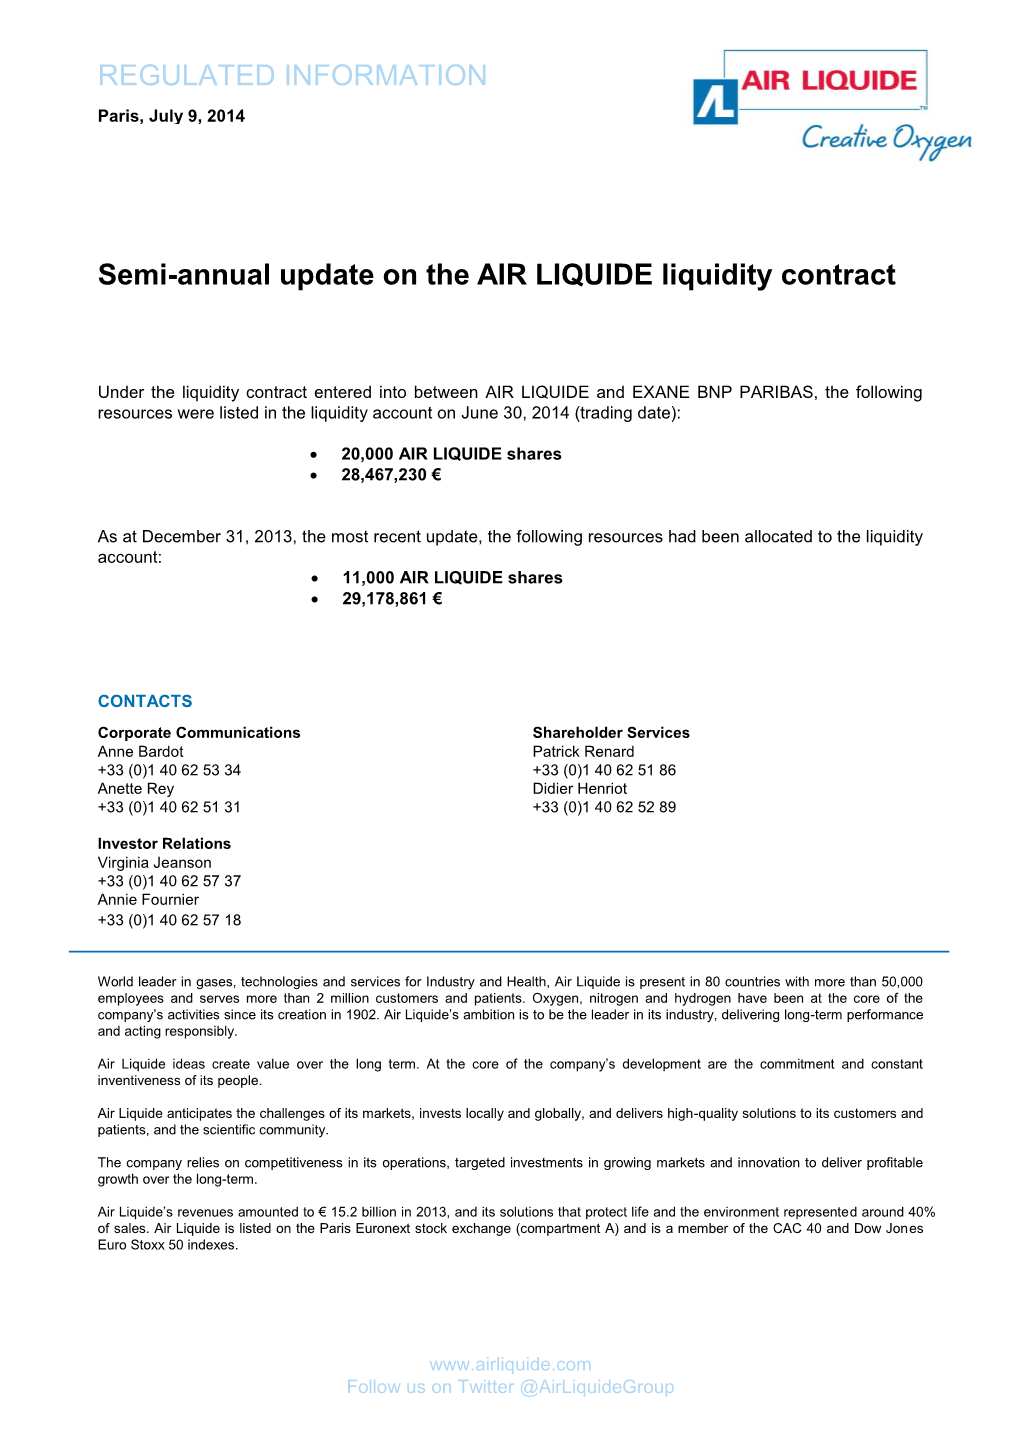 Semi-Annual Update on the AIR LIQUIDE Liquidity Contract